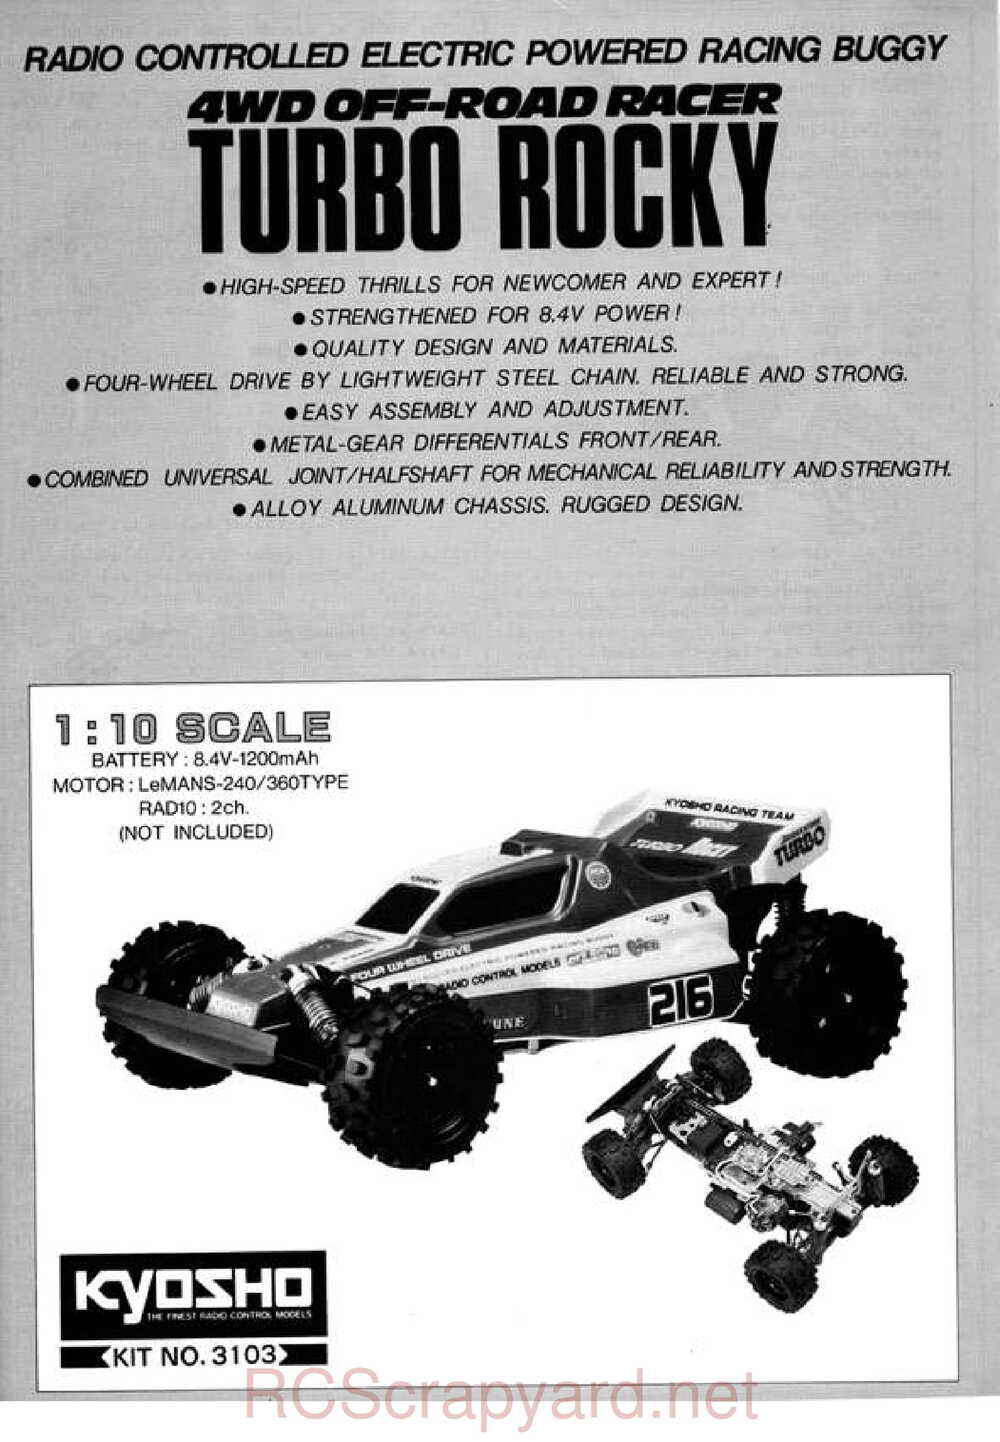 Kyosho - 3103 - Turbo-Rocky - Manual - Page 01